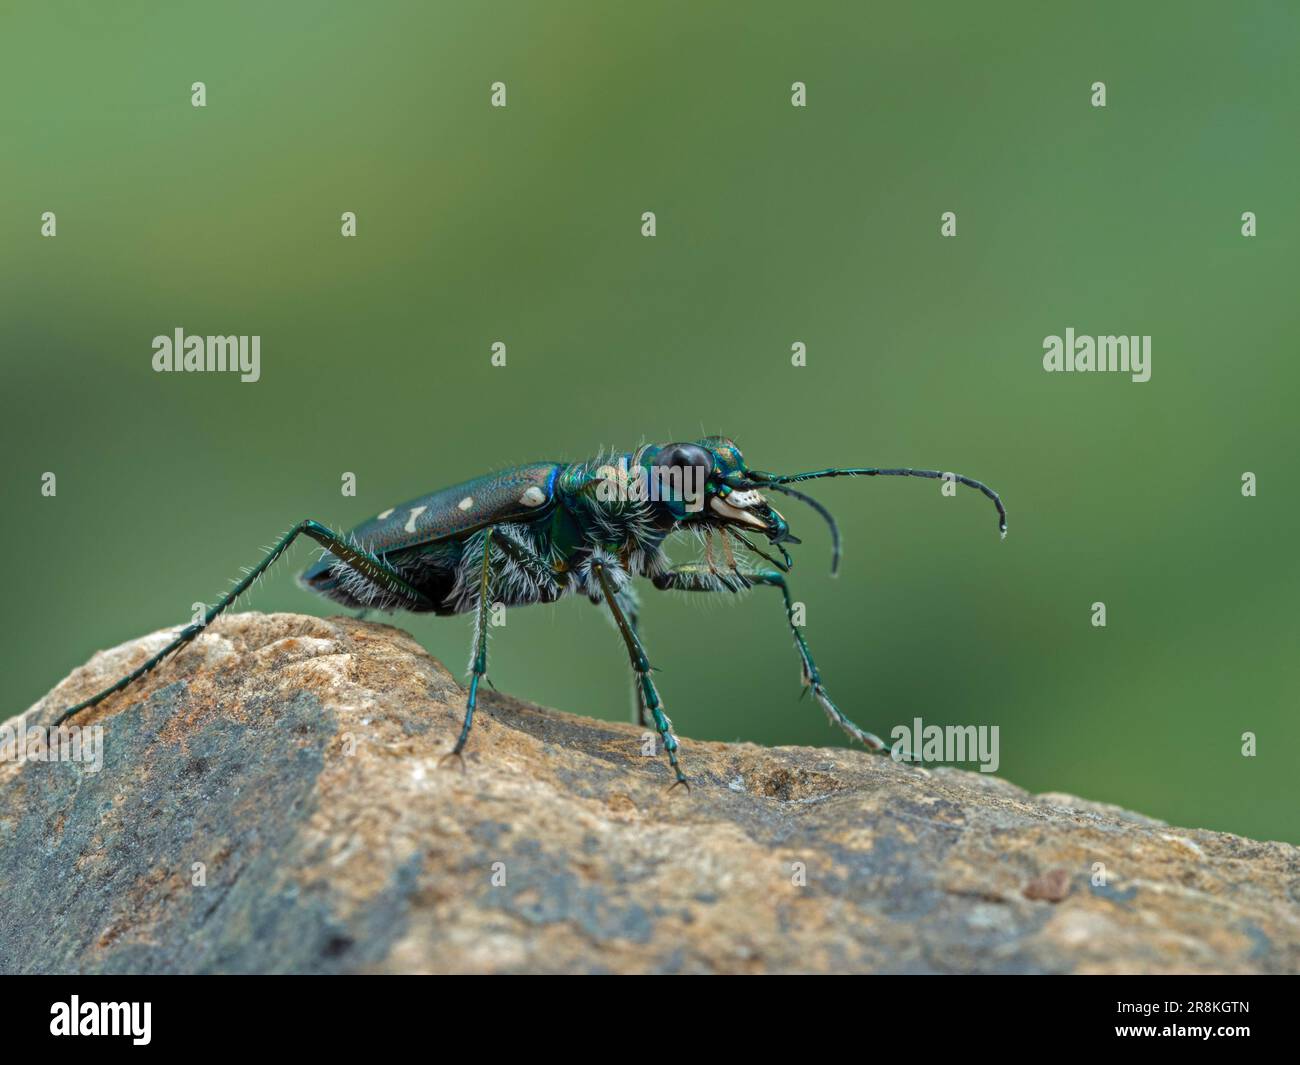 Predatory western tiger beetle (Cicindela oregona) perched on a rock, Richmond, BC, Canada Stock Photo